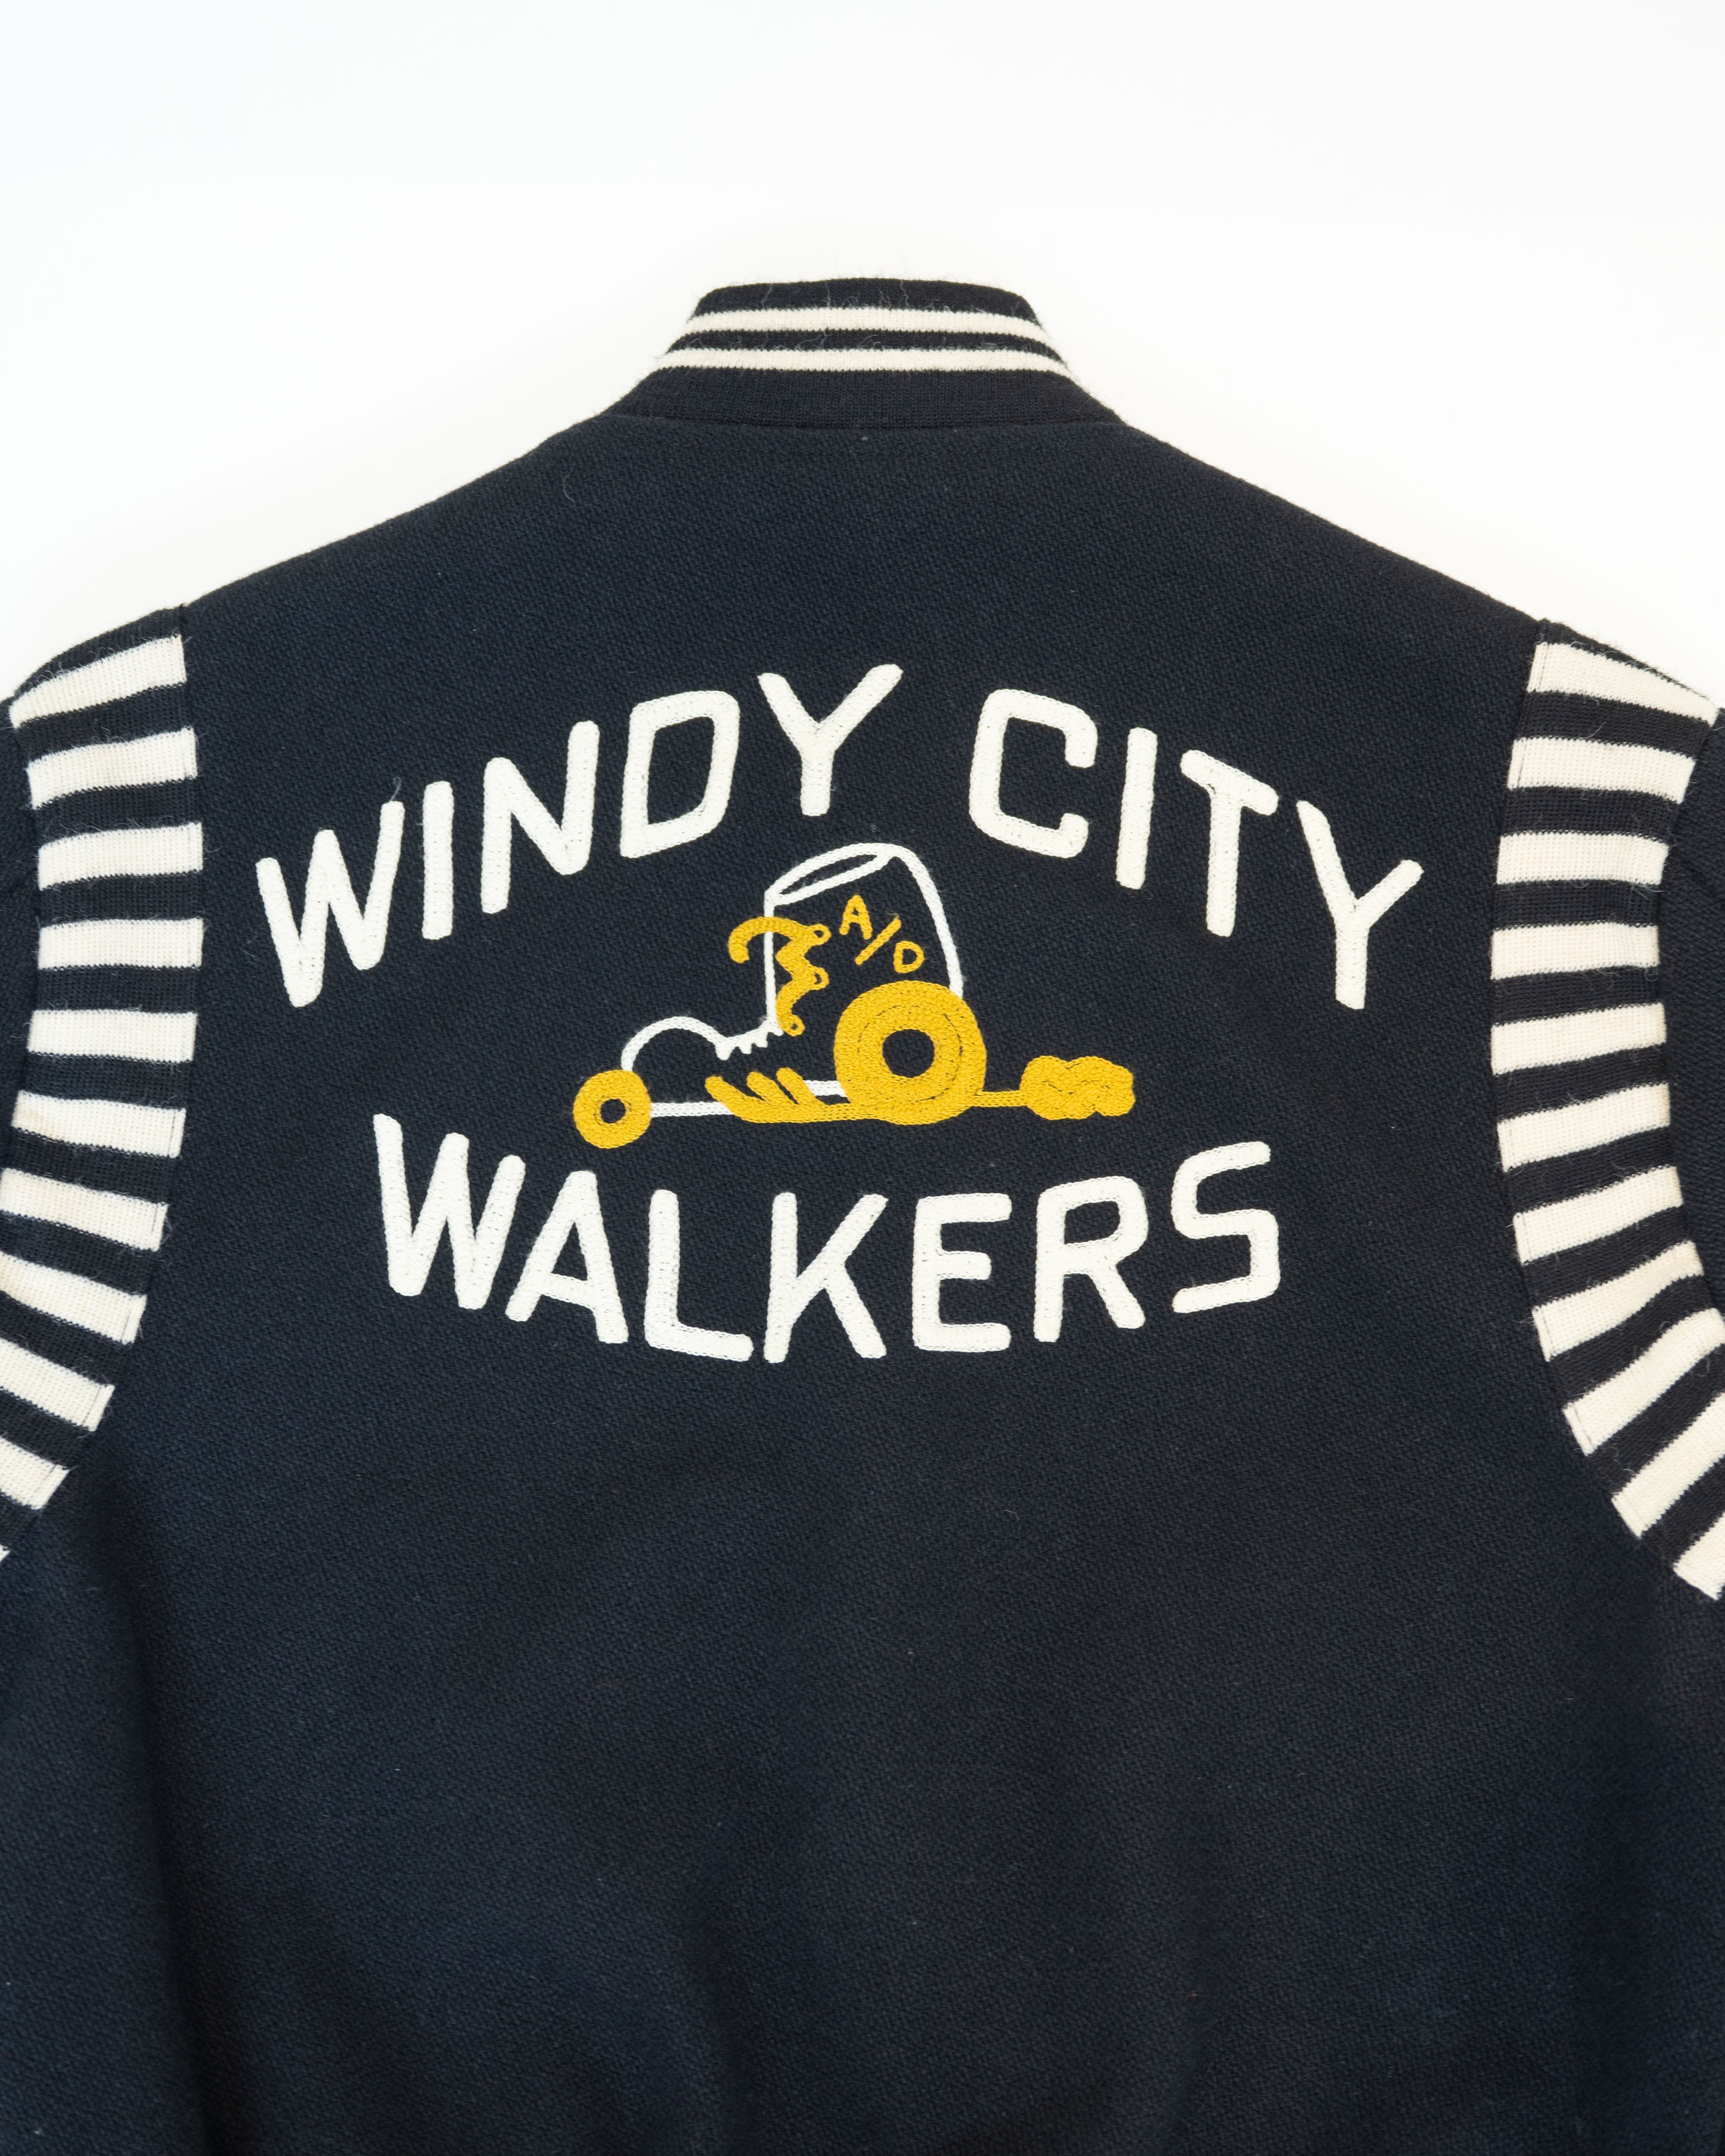 Car Club Jacket / Windy City Walkers MJ17128 | Custom-Black